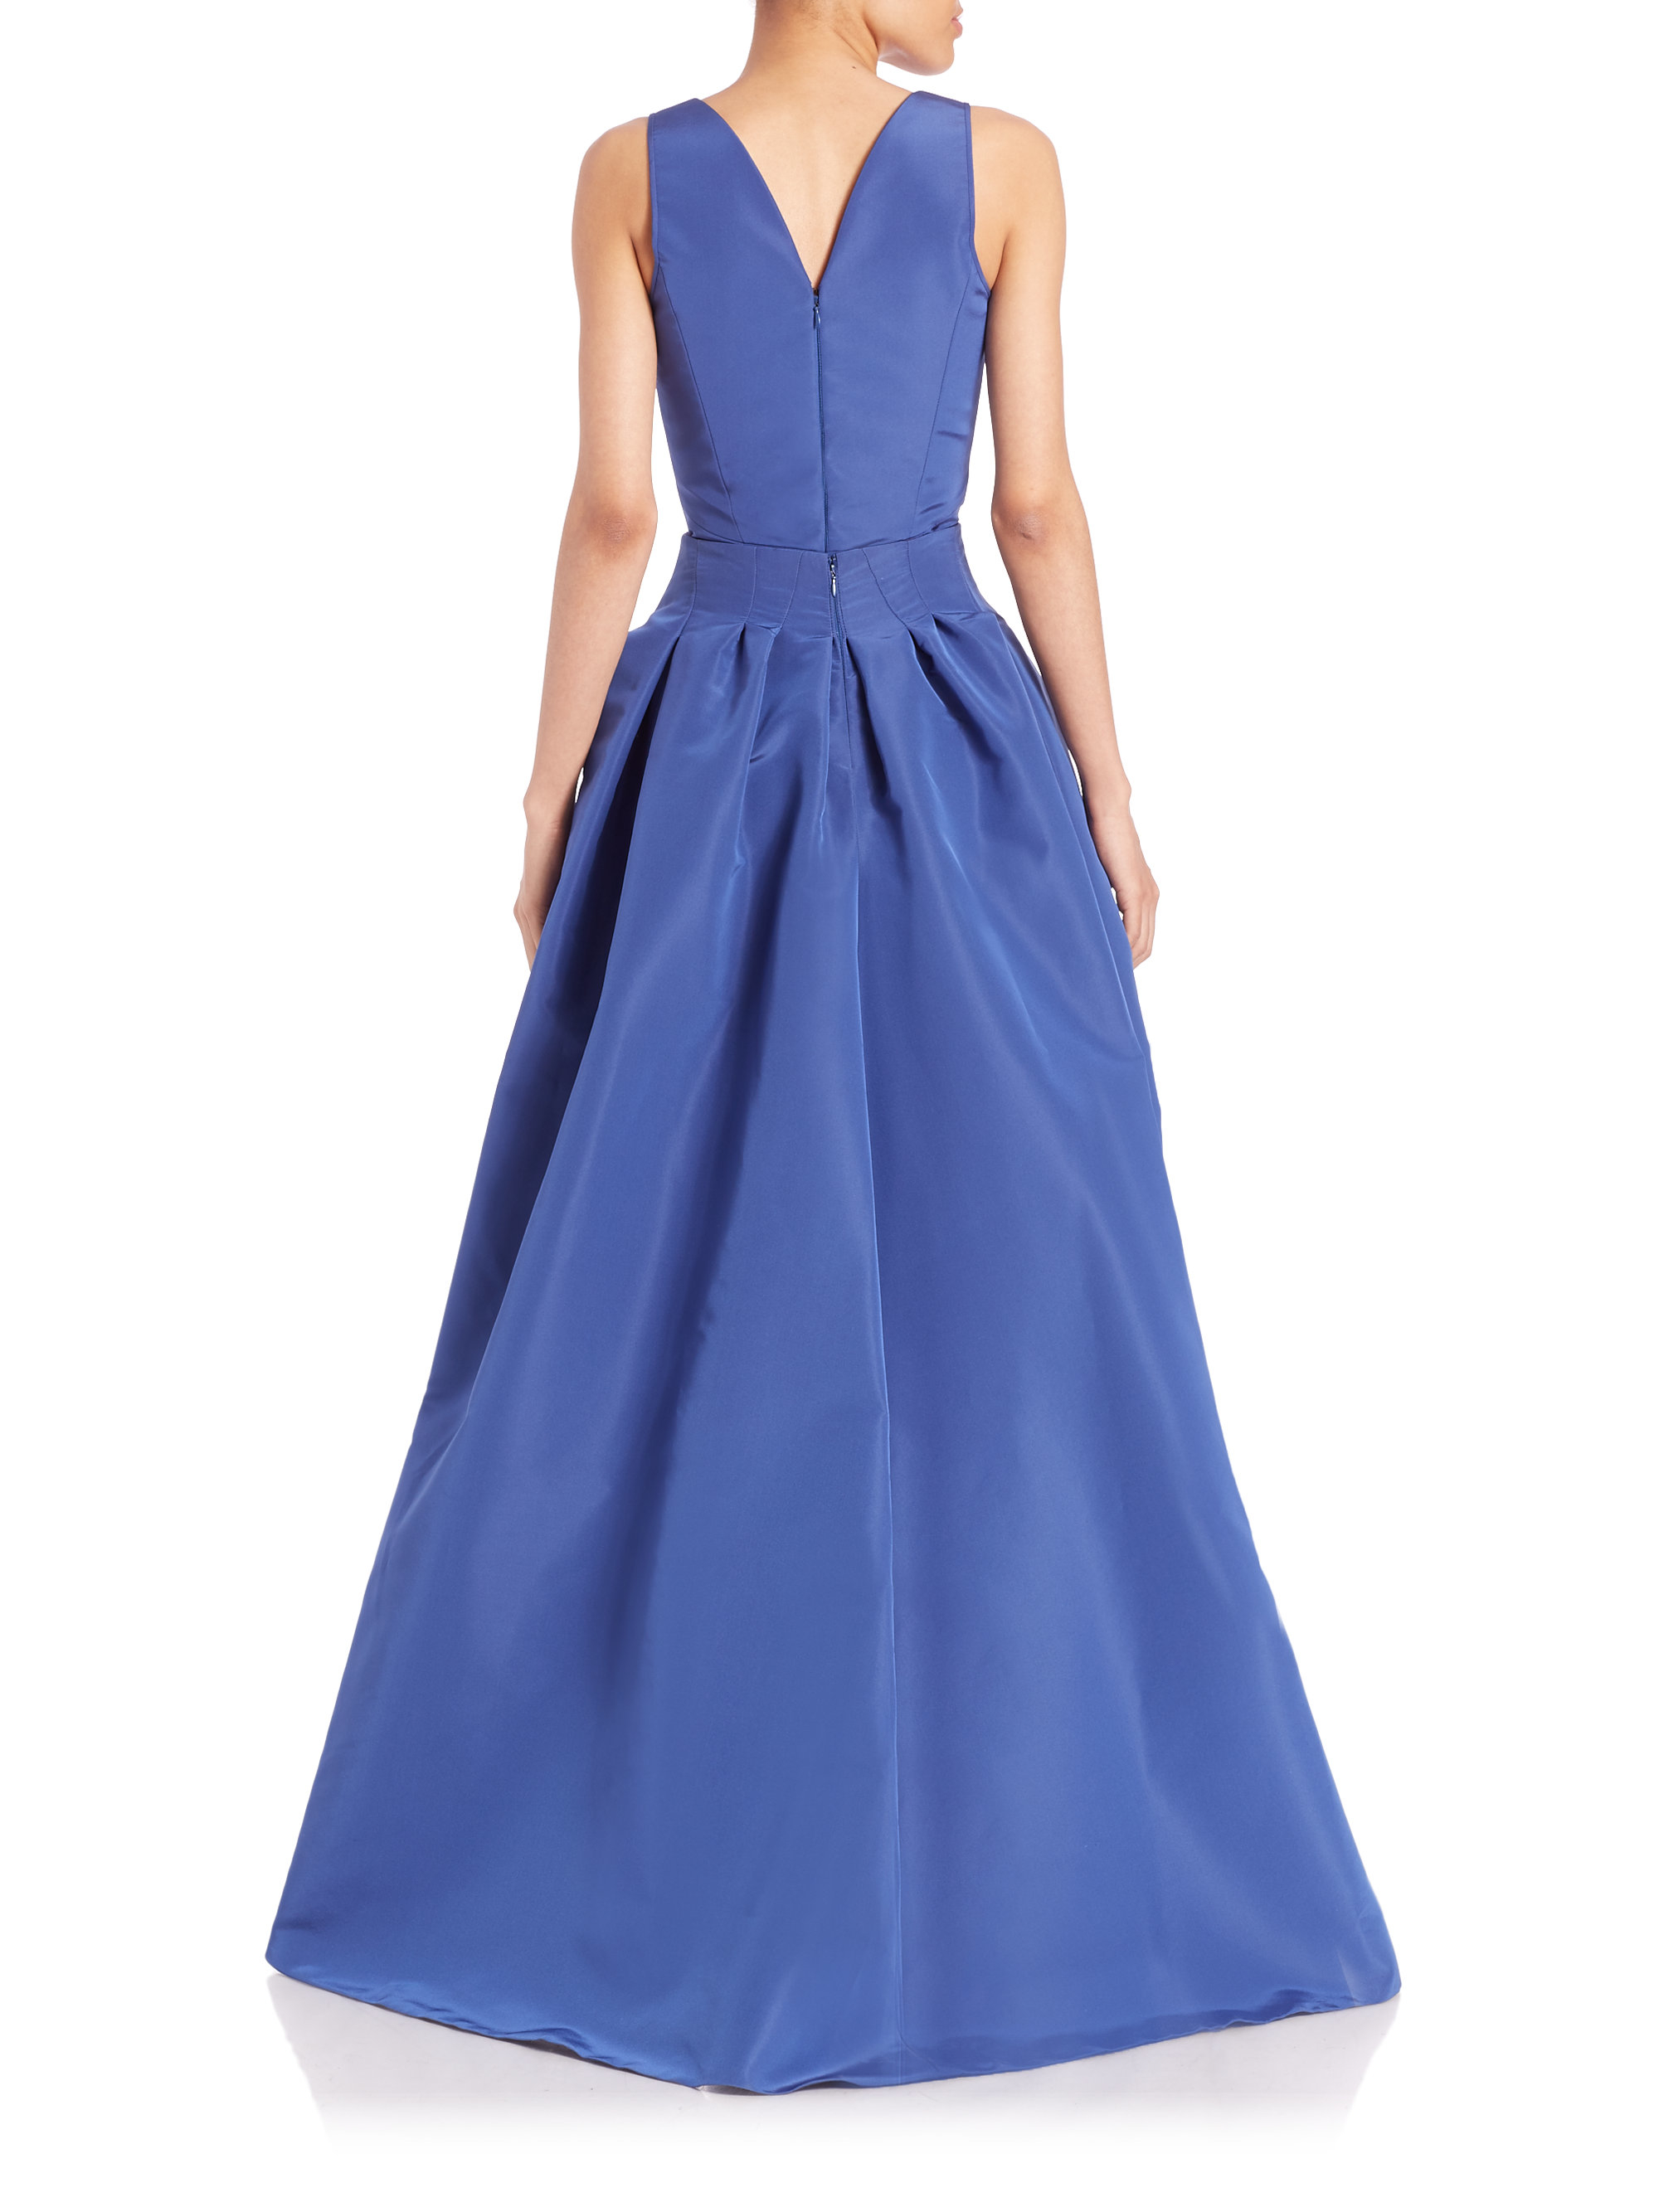 Carolina Herrera Silk Faille Hi-lo Gown in Cobalt Blue (Blue) - Lyst